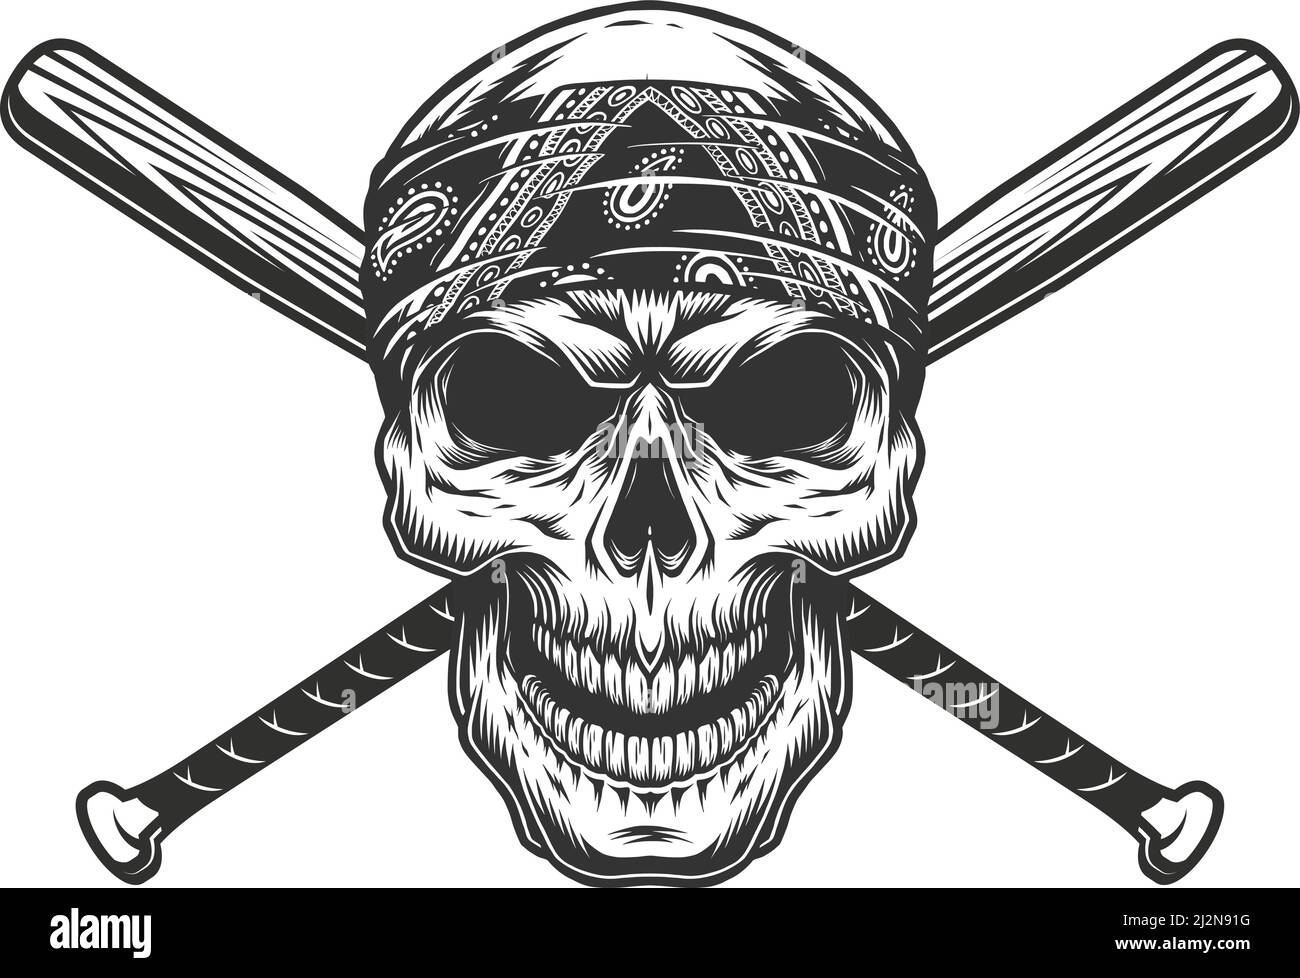 Skull Crossed Baseball Bats Barbed Wire Stock Vector Royalty Free  747917137  Shutterstock